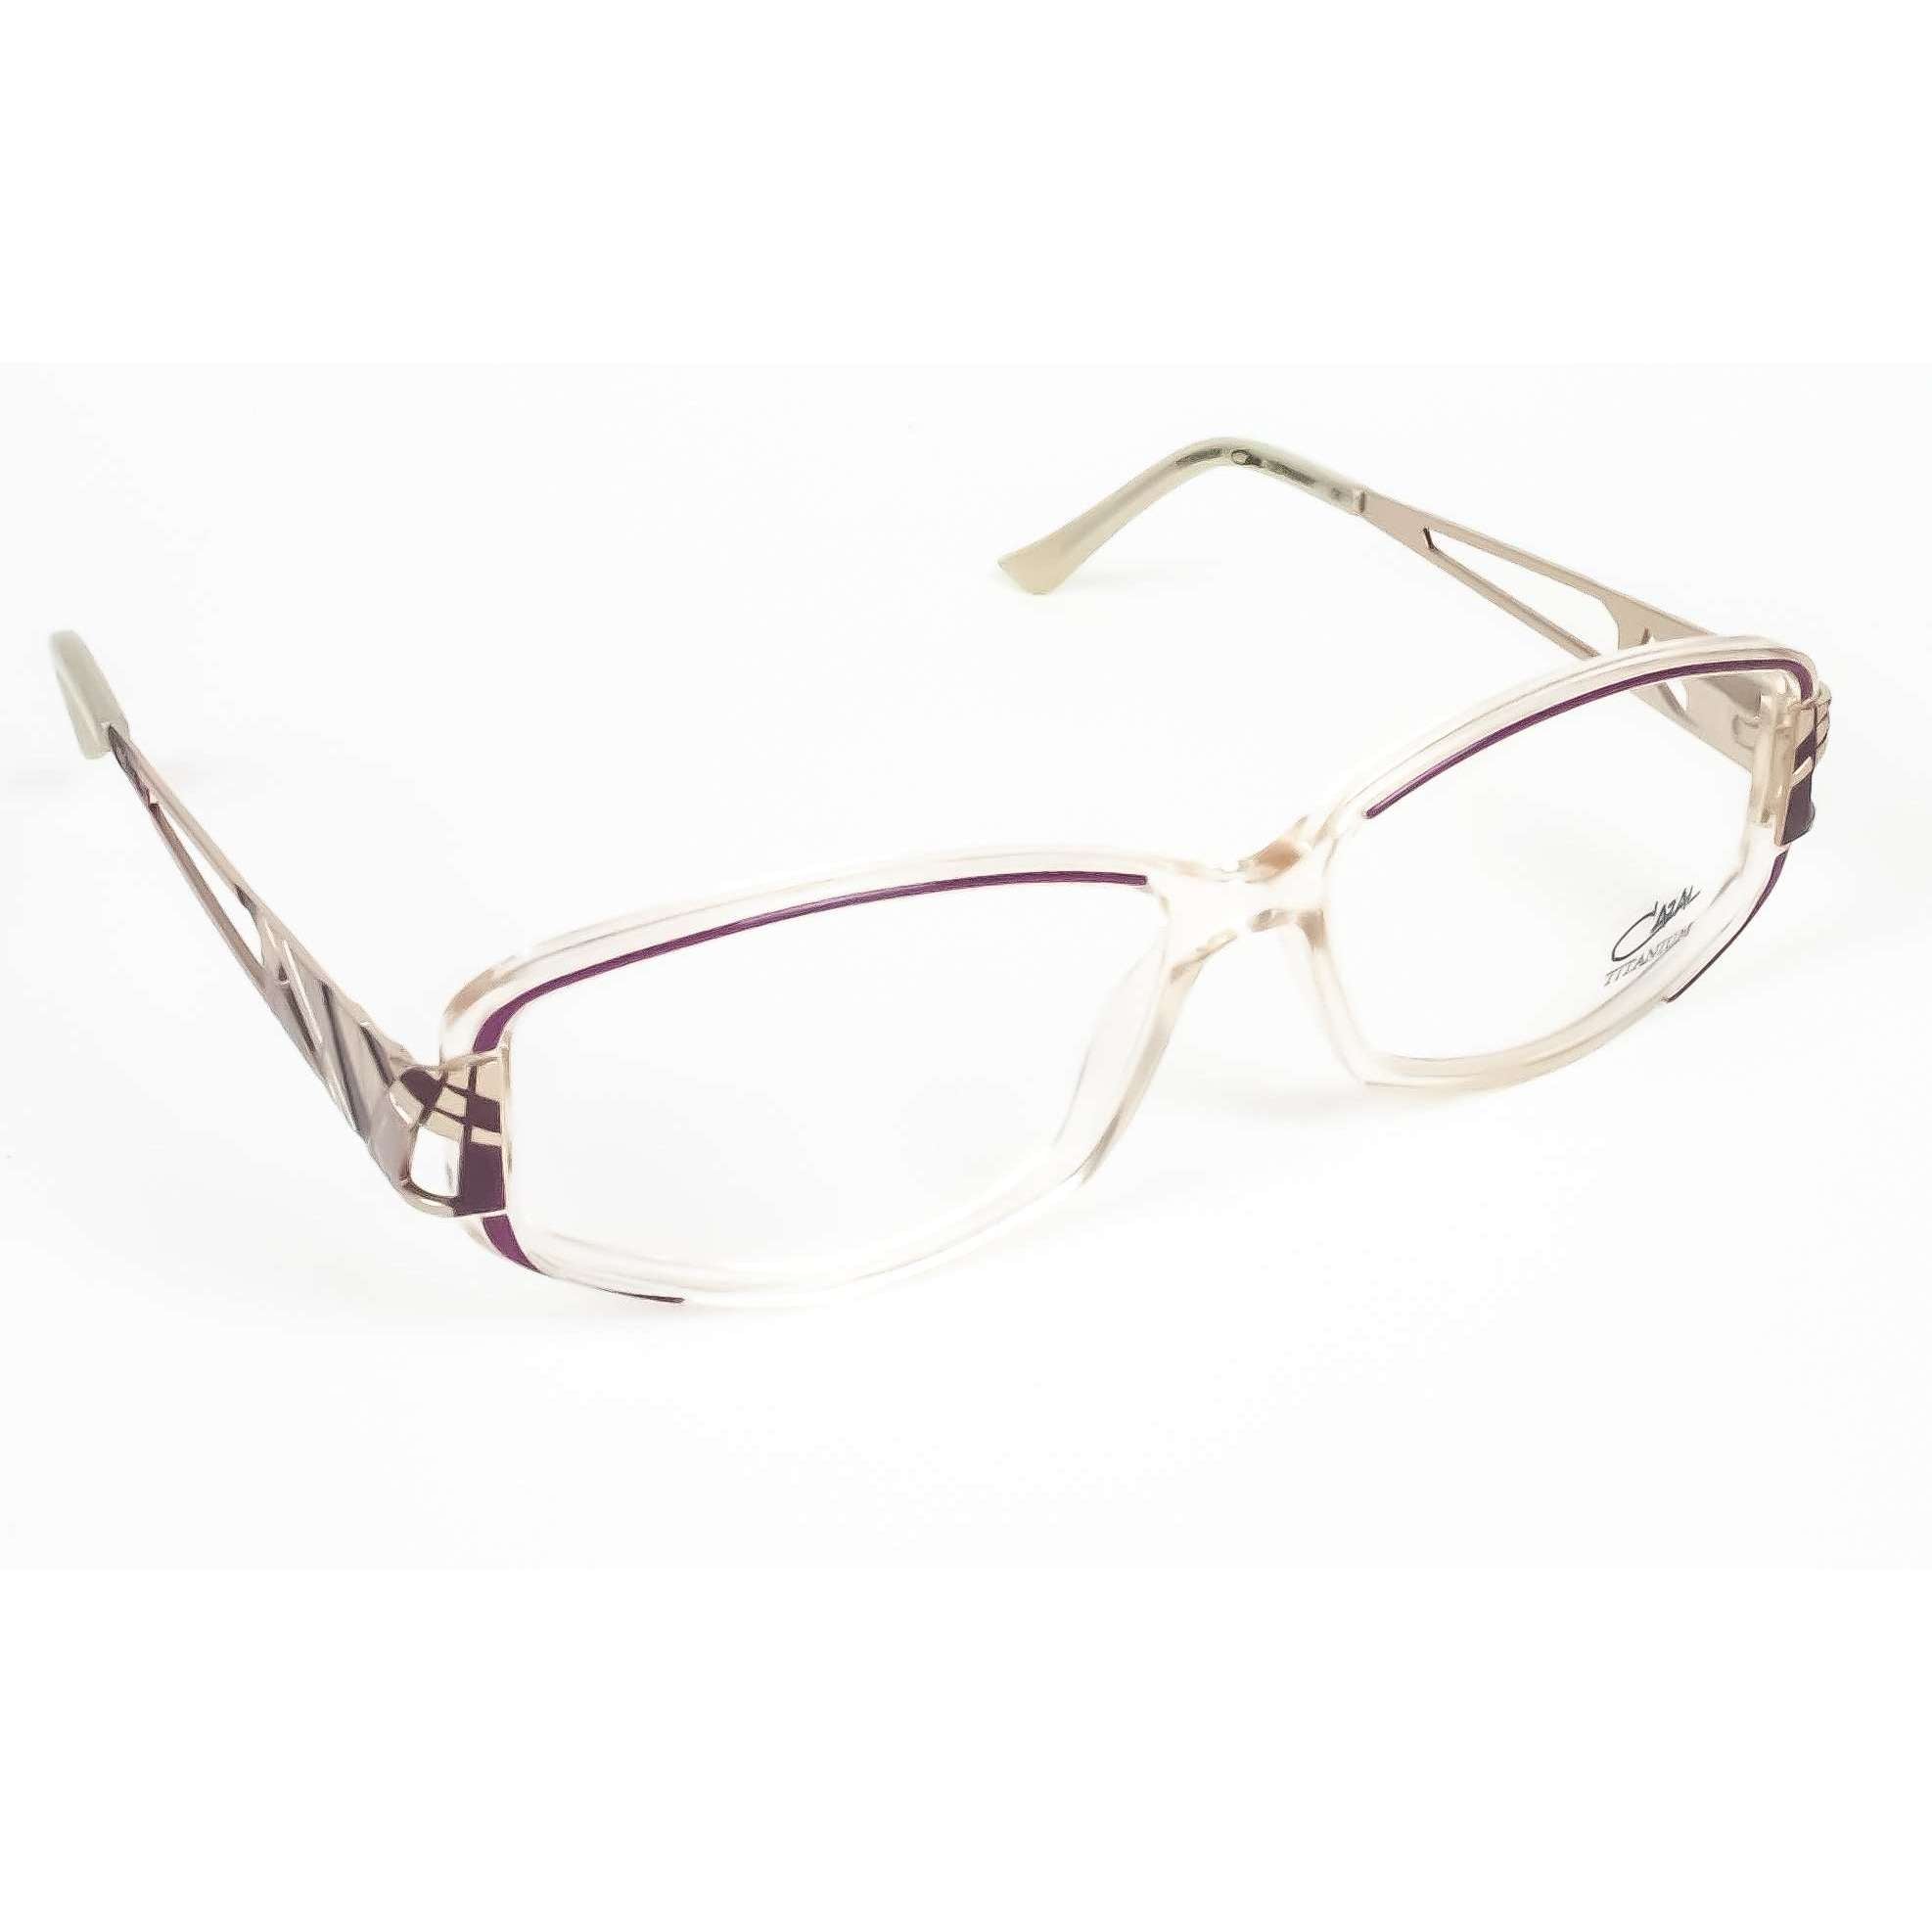 Cazal Model 3043 Oval Purple Glasses